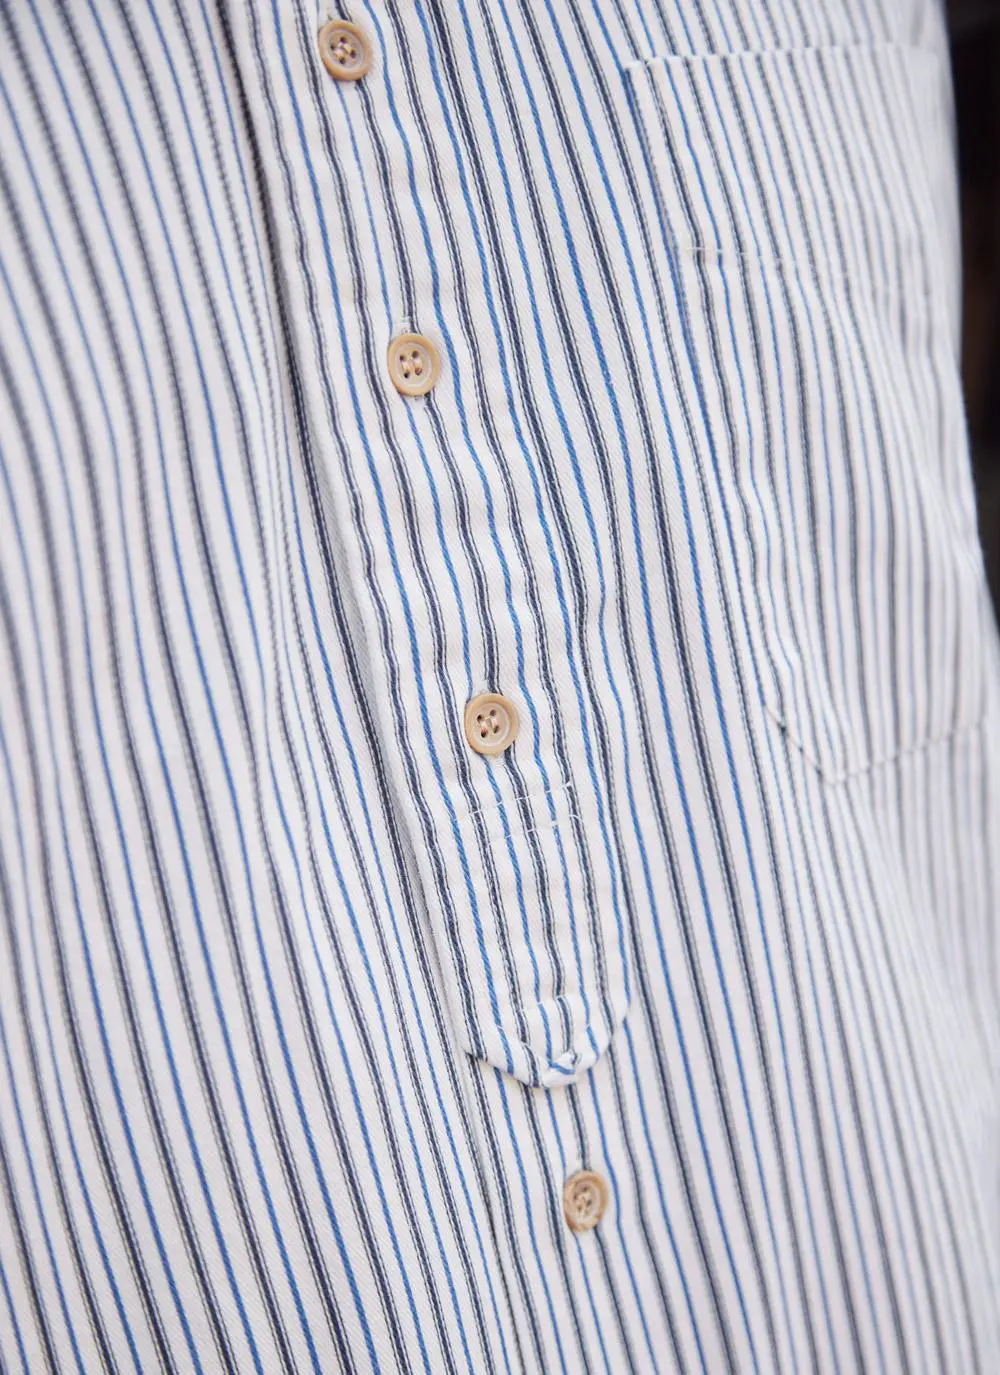 Stephen Stripe Cotton Grandfather Shirt